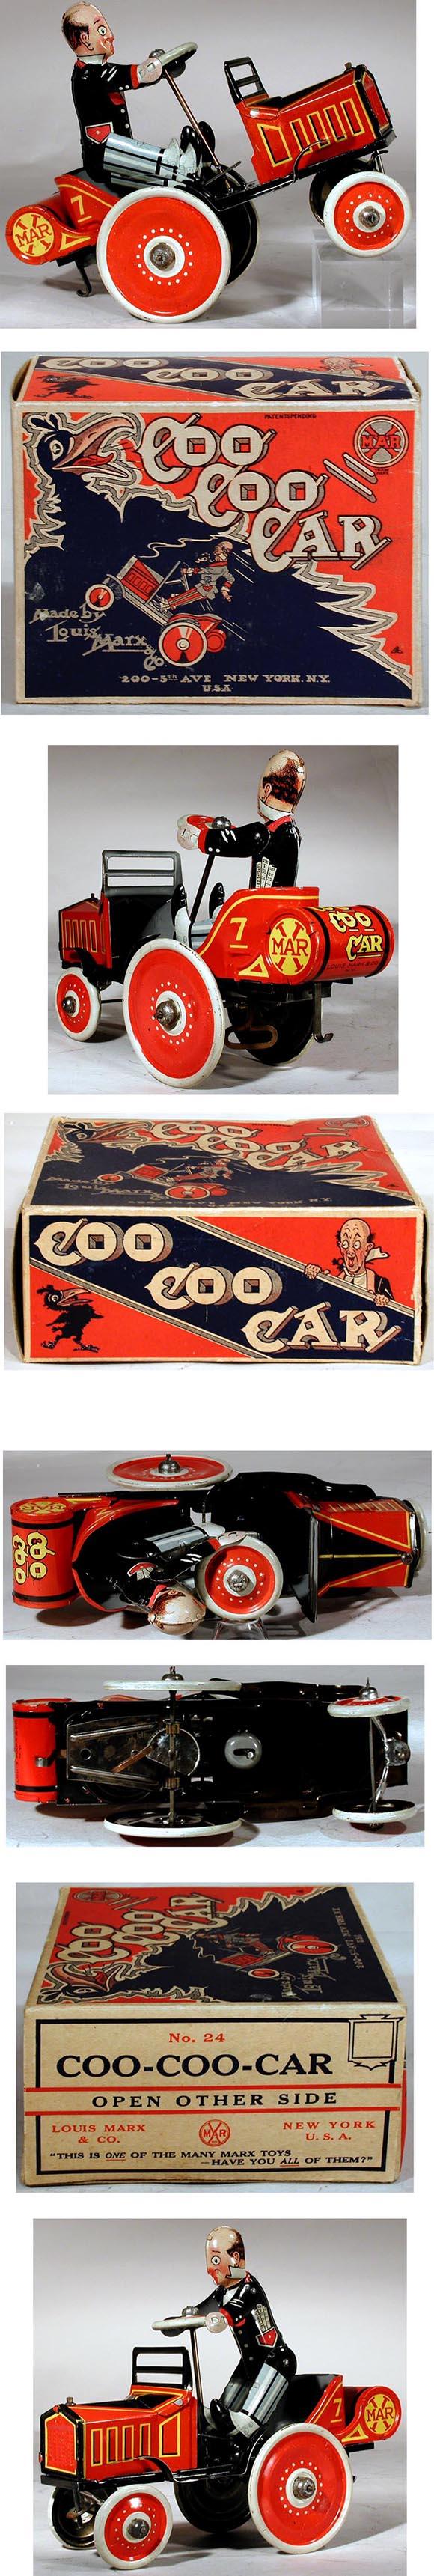 1931 Marx, Coo Coo Car in Original Box